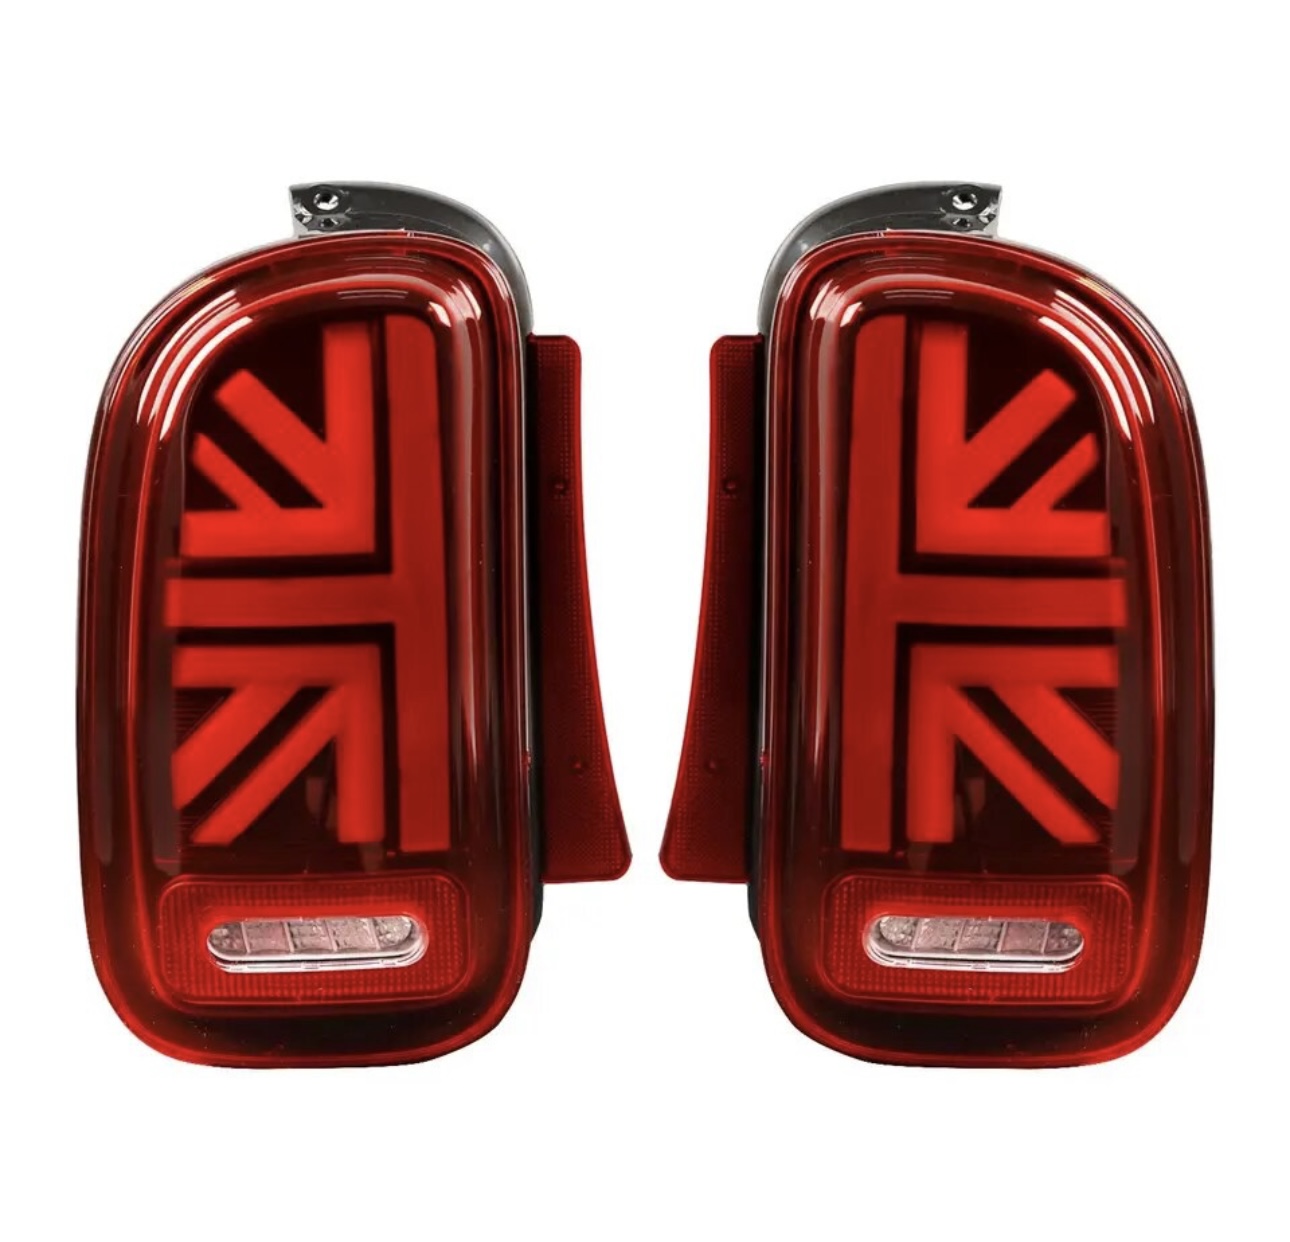 Generation 2 MINI Lighting - Union Jack Tail Lights for R55, R56, R57, R58,  R59, R60 model MINIs